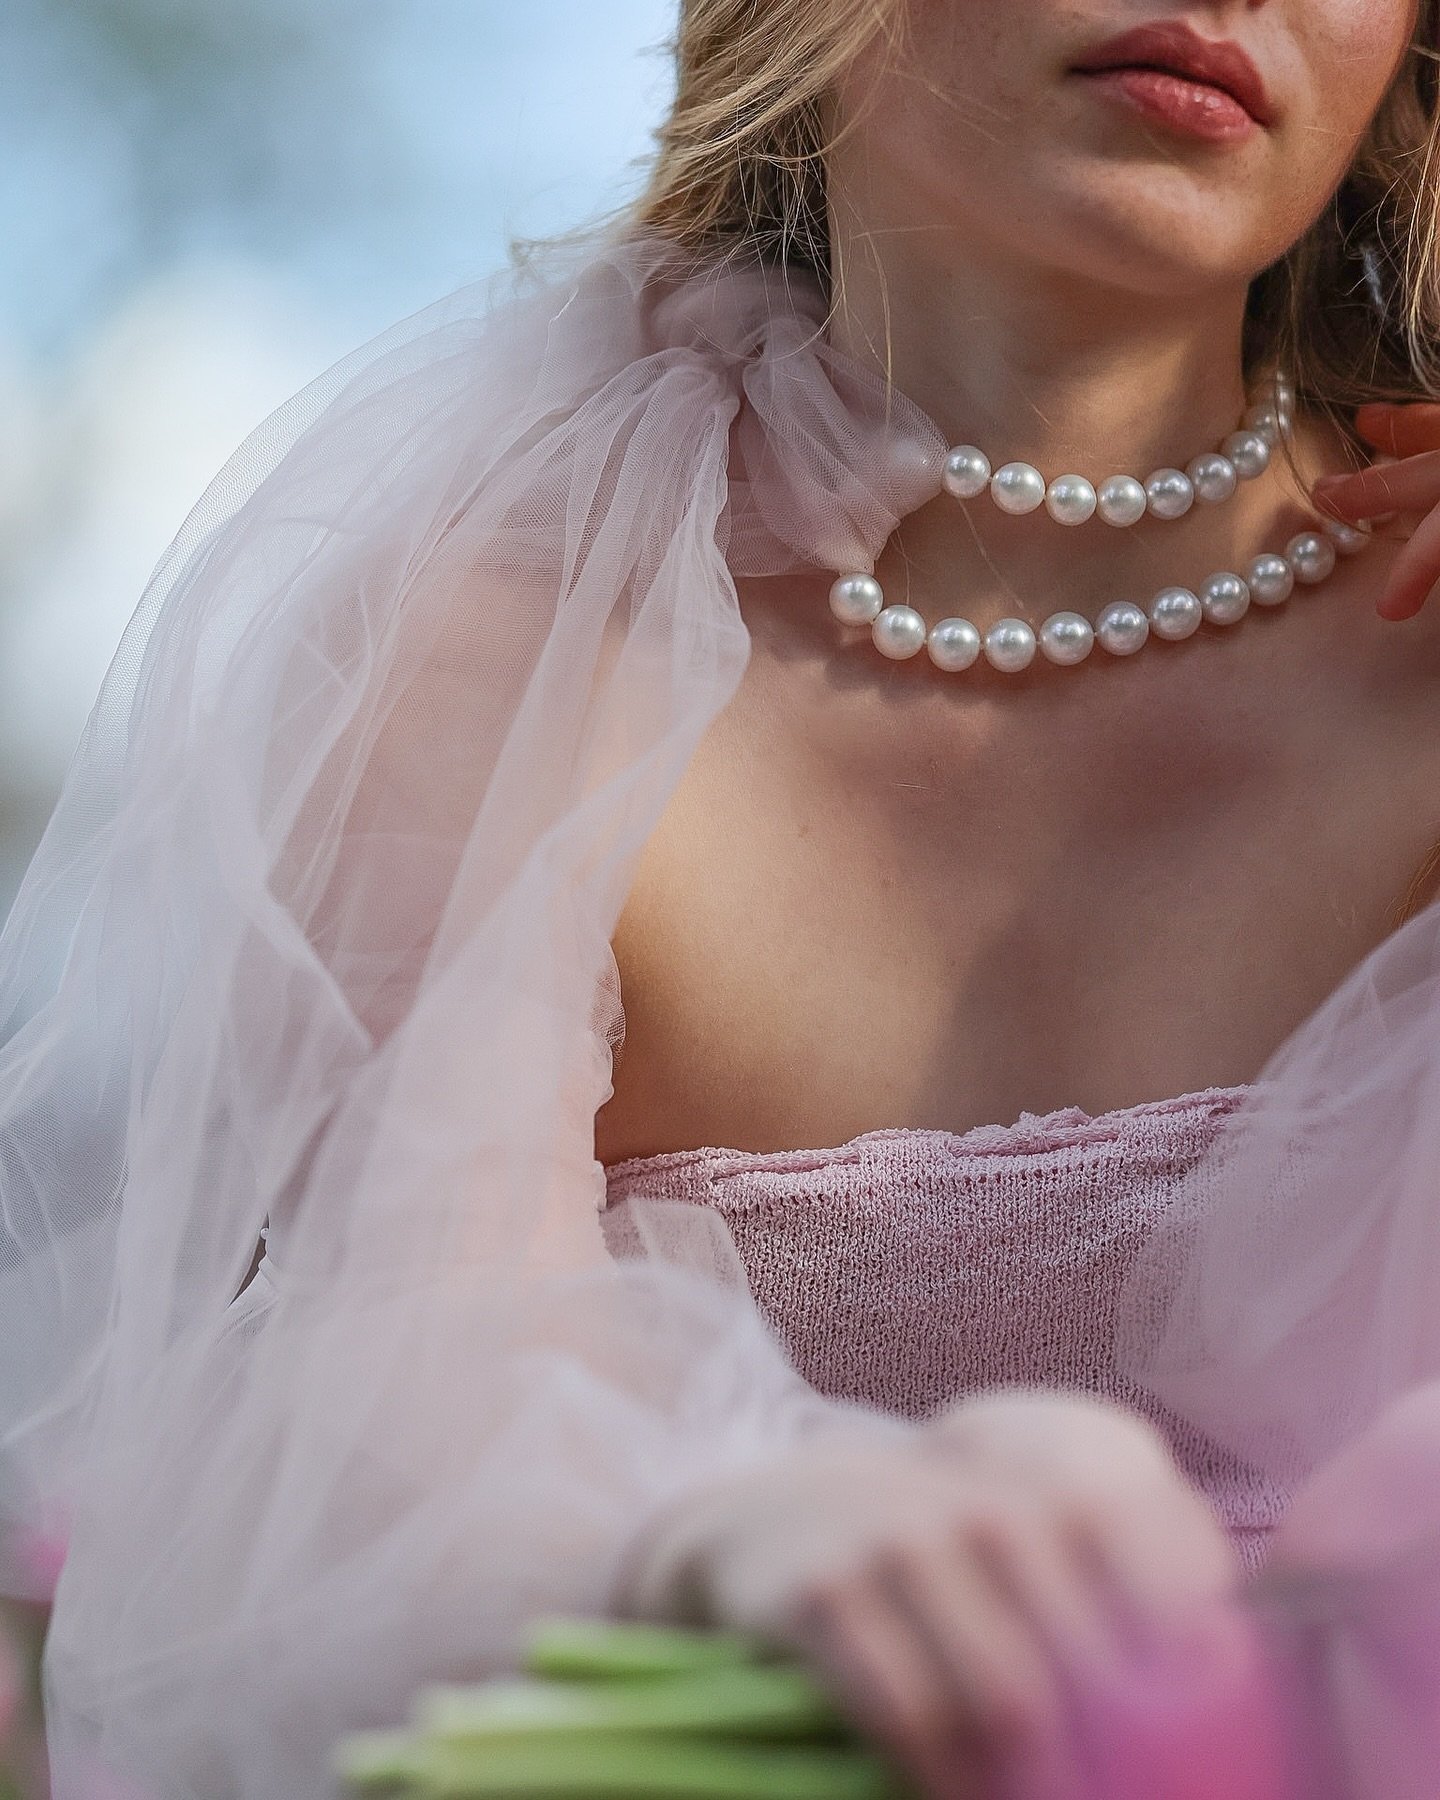 Blossoming beauty, drapped in pearls.💐

#pearls#trendingnecklace#springvibe#swisshandmade#jewellery#koenigjewellery